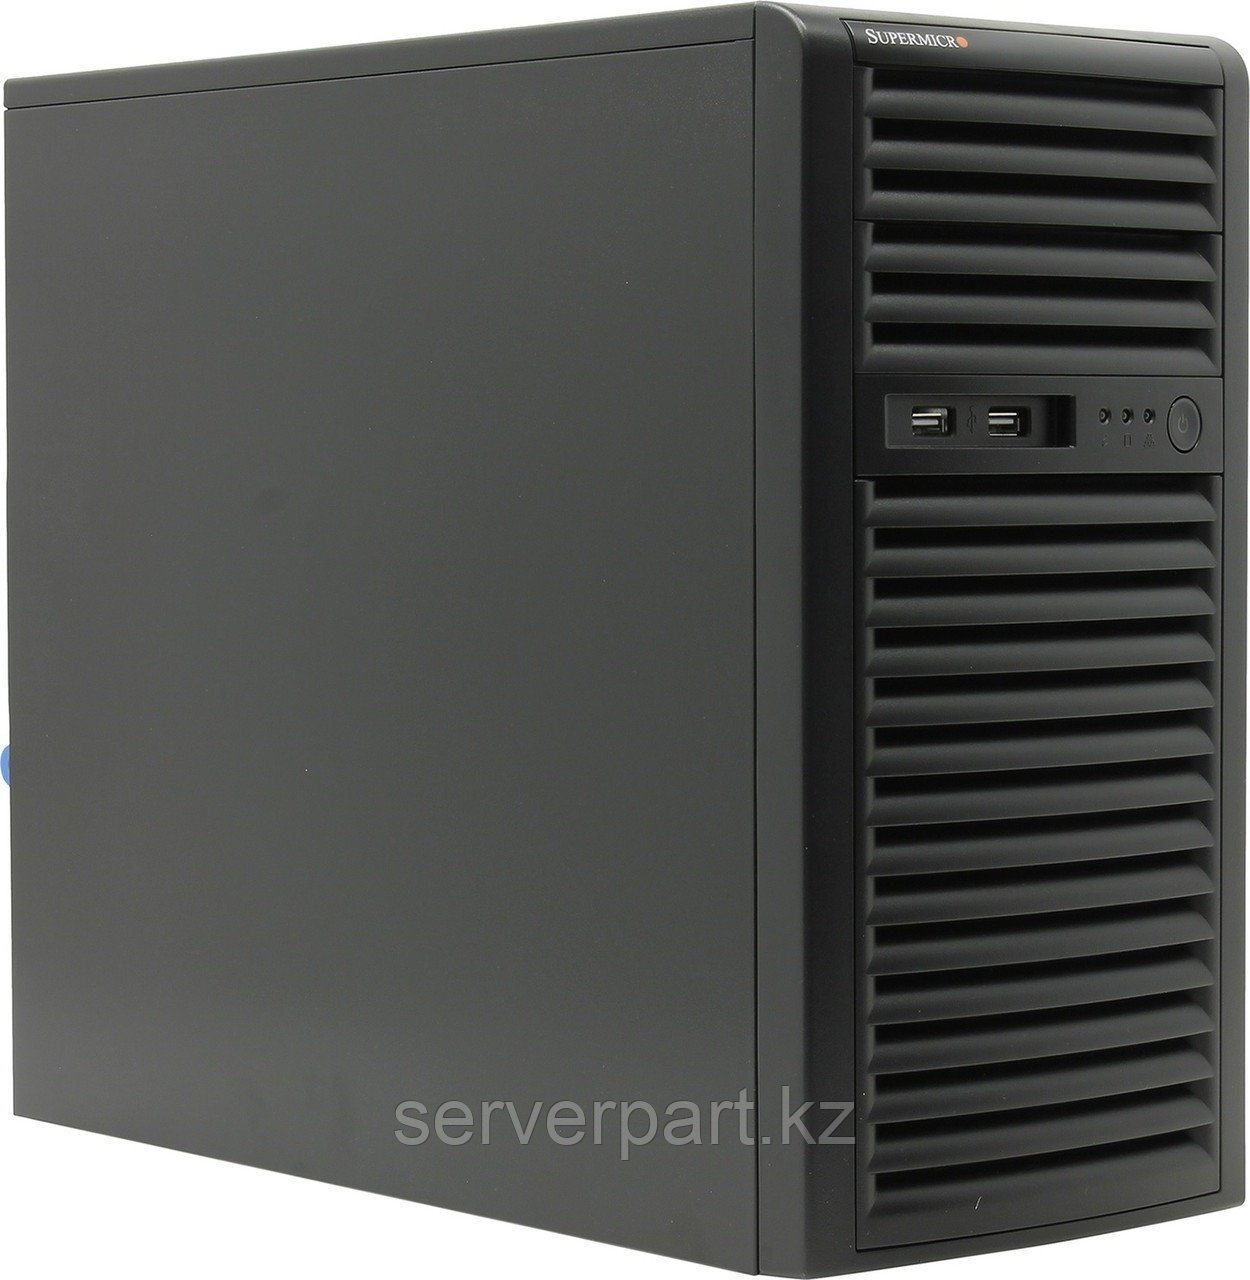 Сервер Supermicro SYS-5039D Tower/4-core intel xeon E3-1220v6 3GHz/64GB UDIMM nECC1x480GB SSD DT Hyb